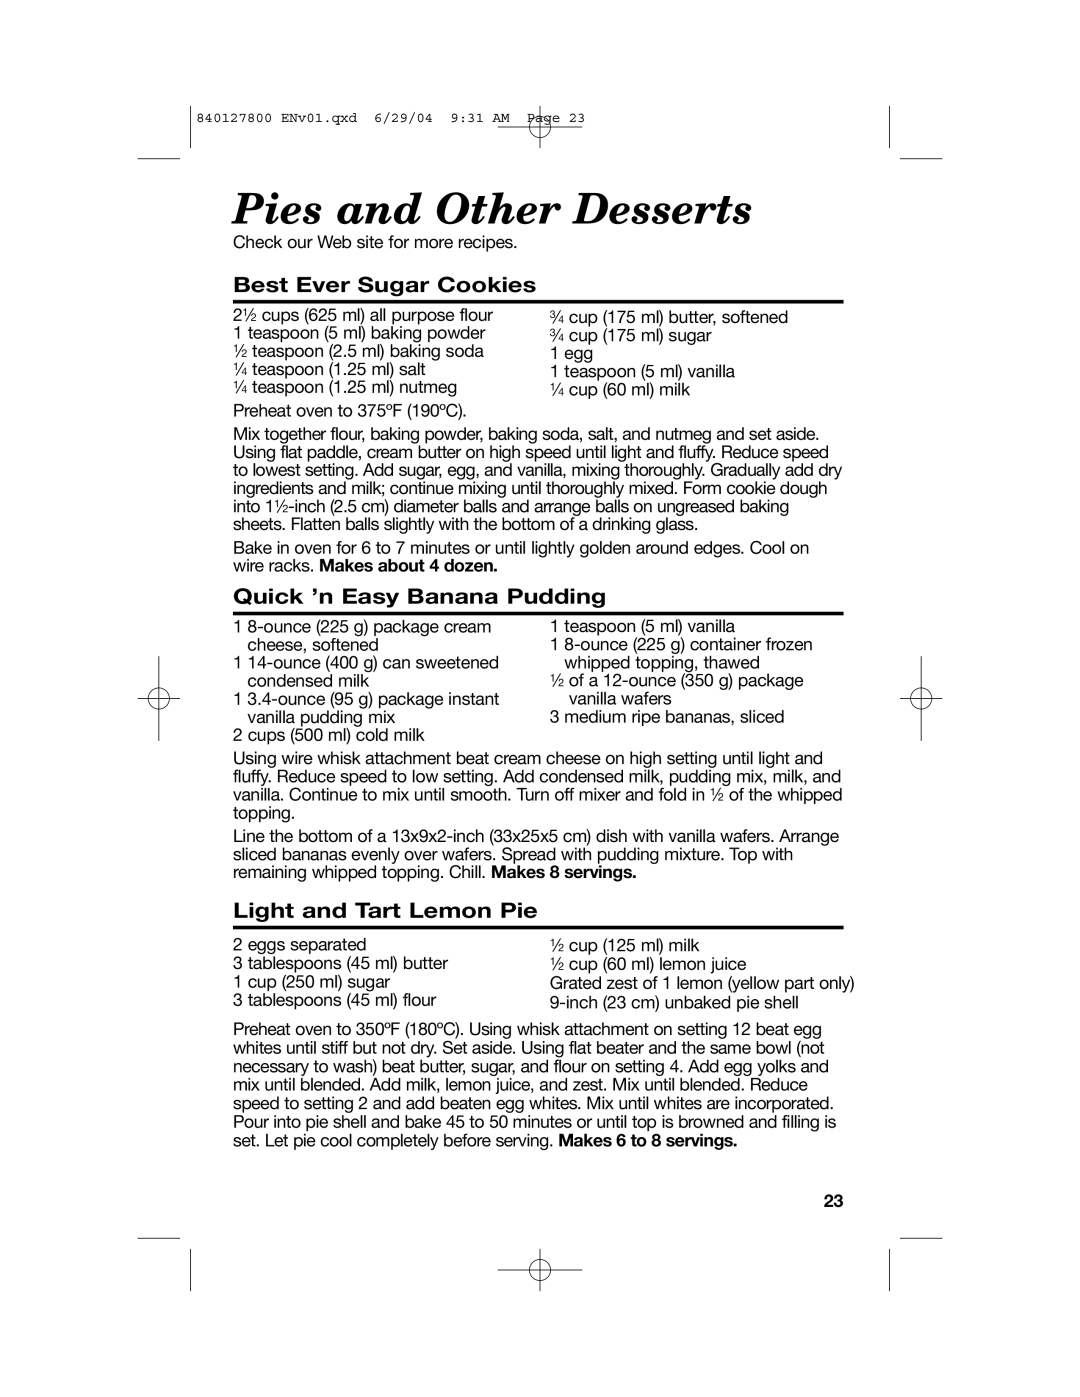 Hamilton Beach 63225 manual Best Ever Sugar Cookies, Quick ’n Easy Banana Pudding, Light and Tart Lemon Pie 